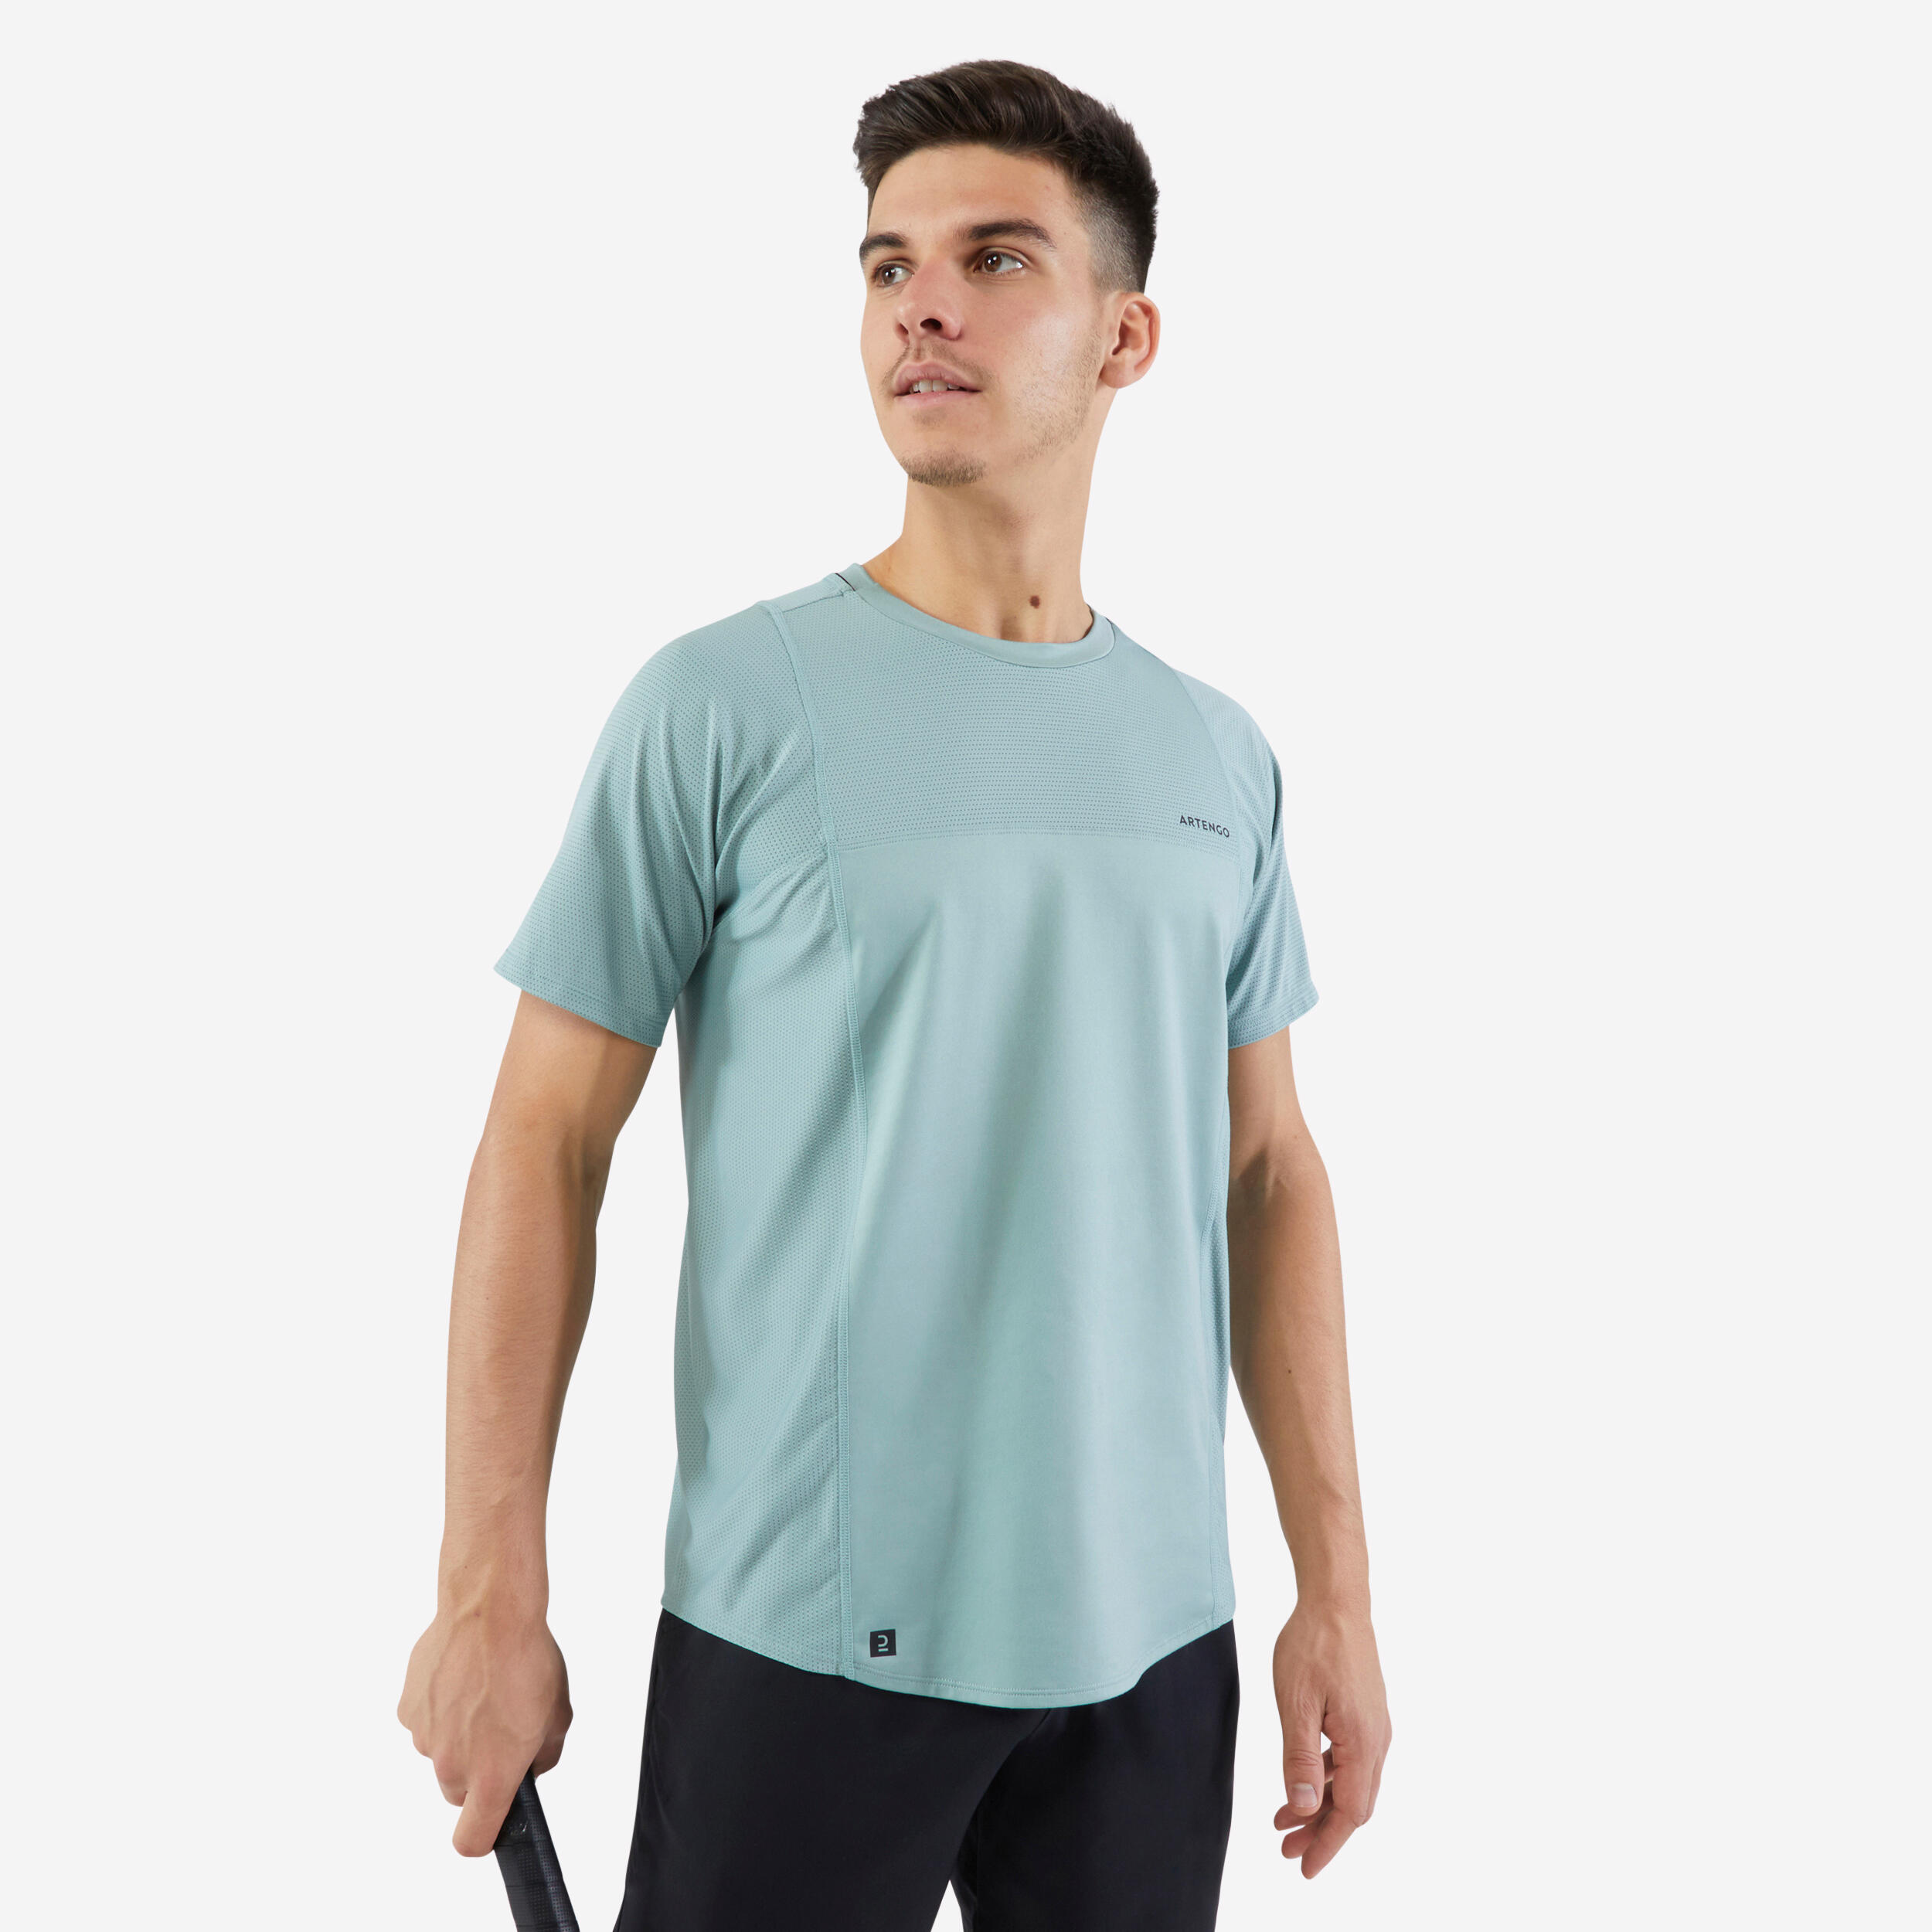 ARTENGO Men's Tennis Short-Sleeved T-Shirt Dry RN - Green-Grey